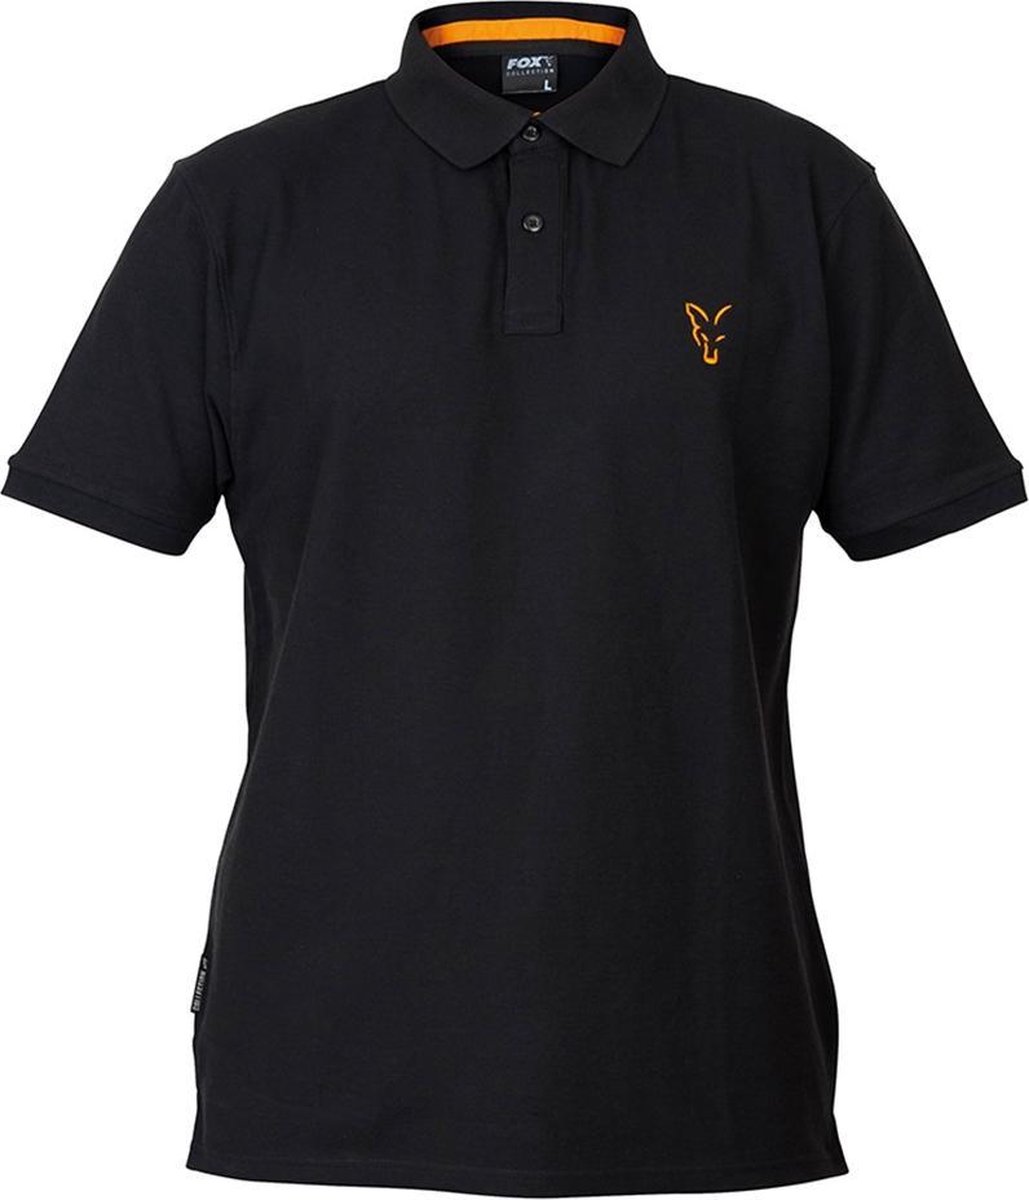 Fox Collection Black/Orange - Polo Shirt - Maat S